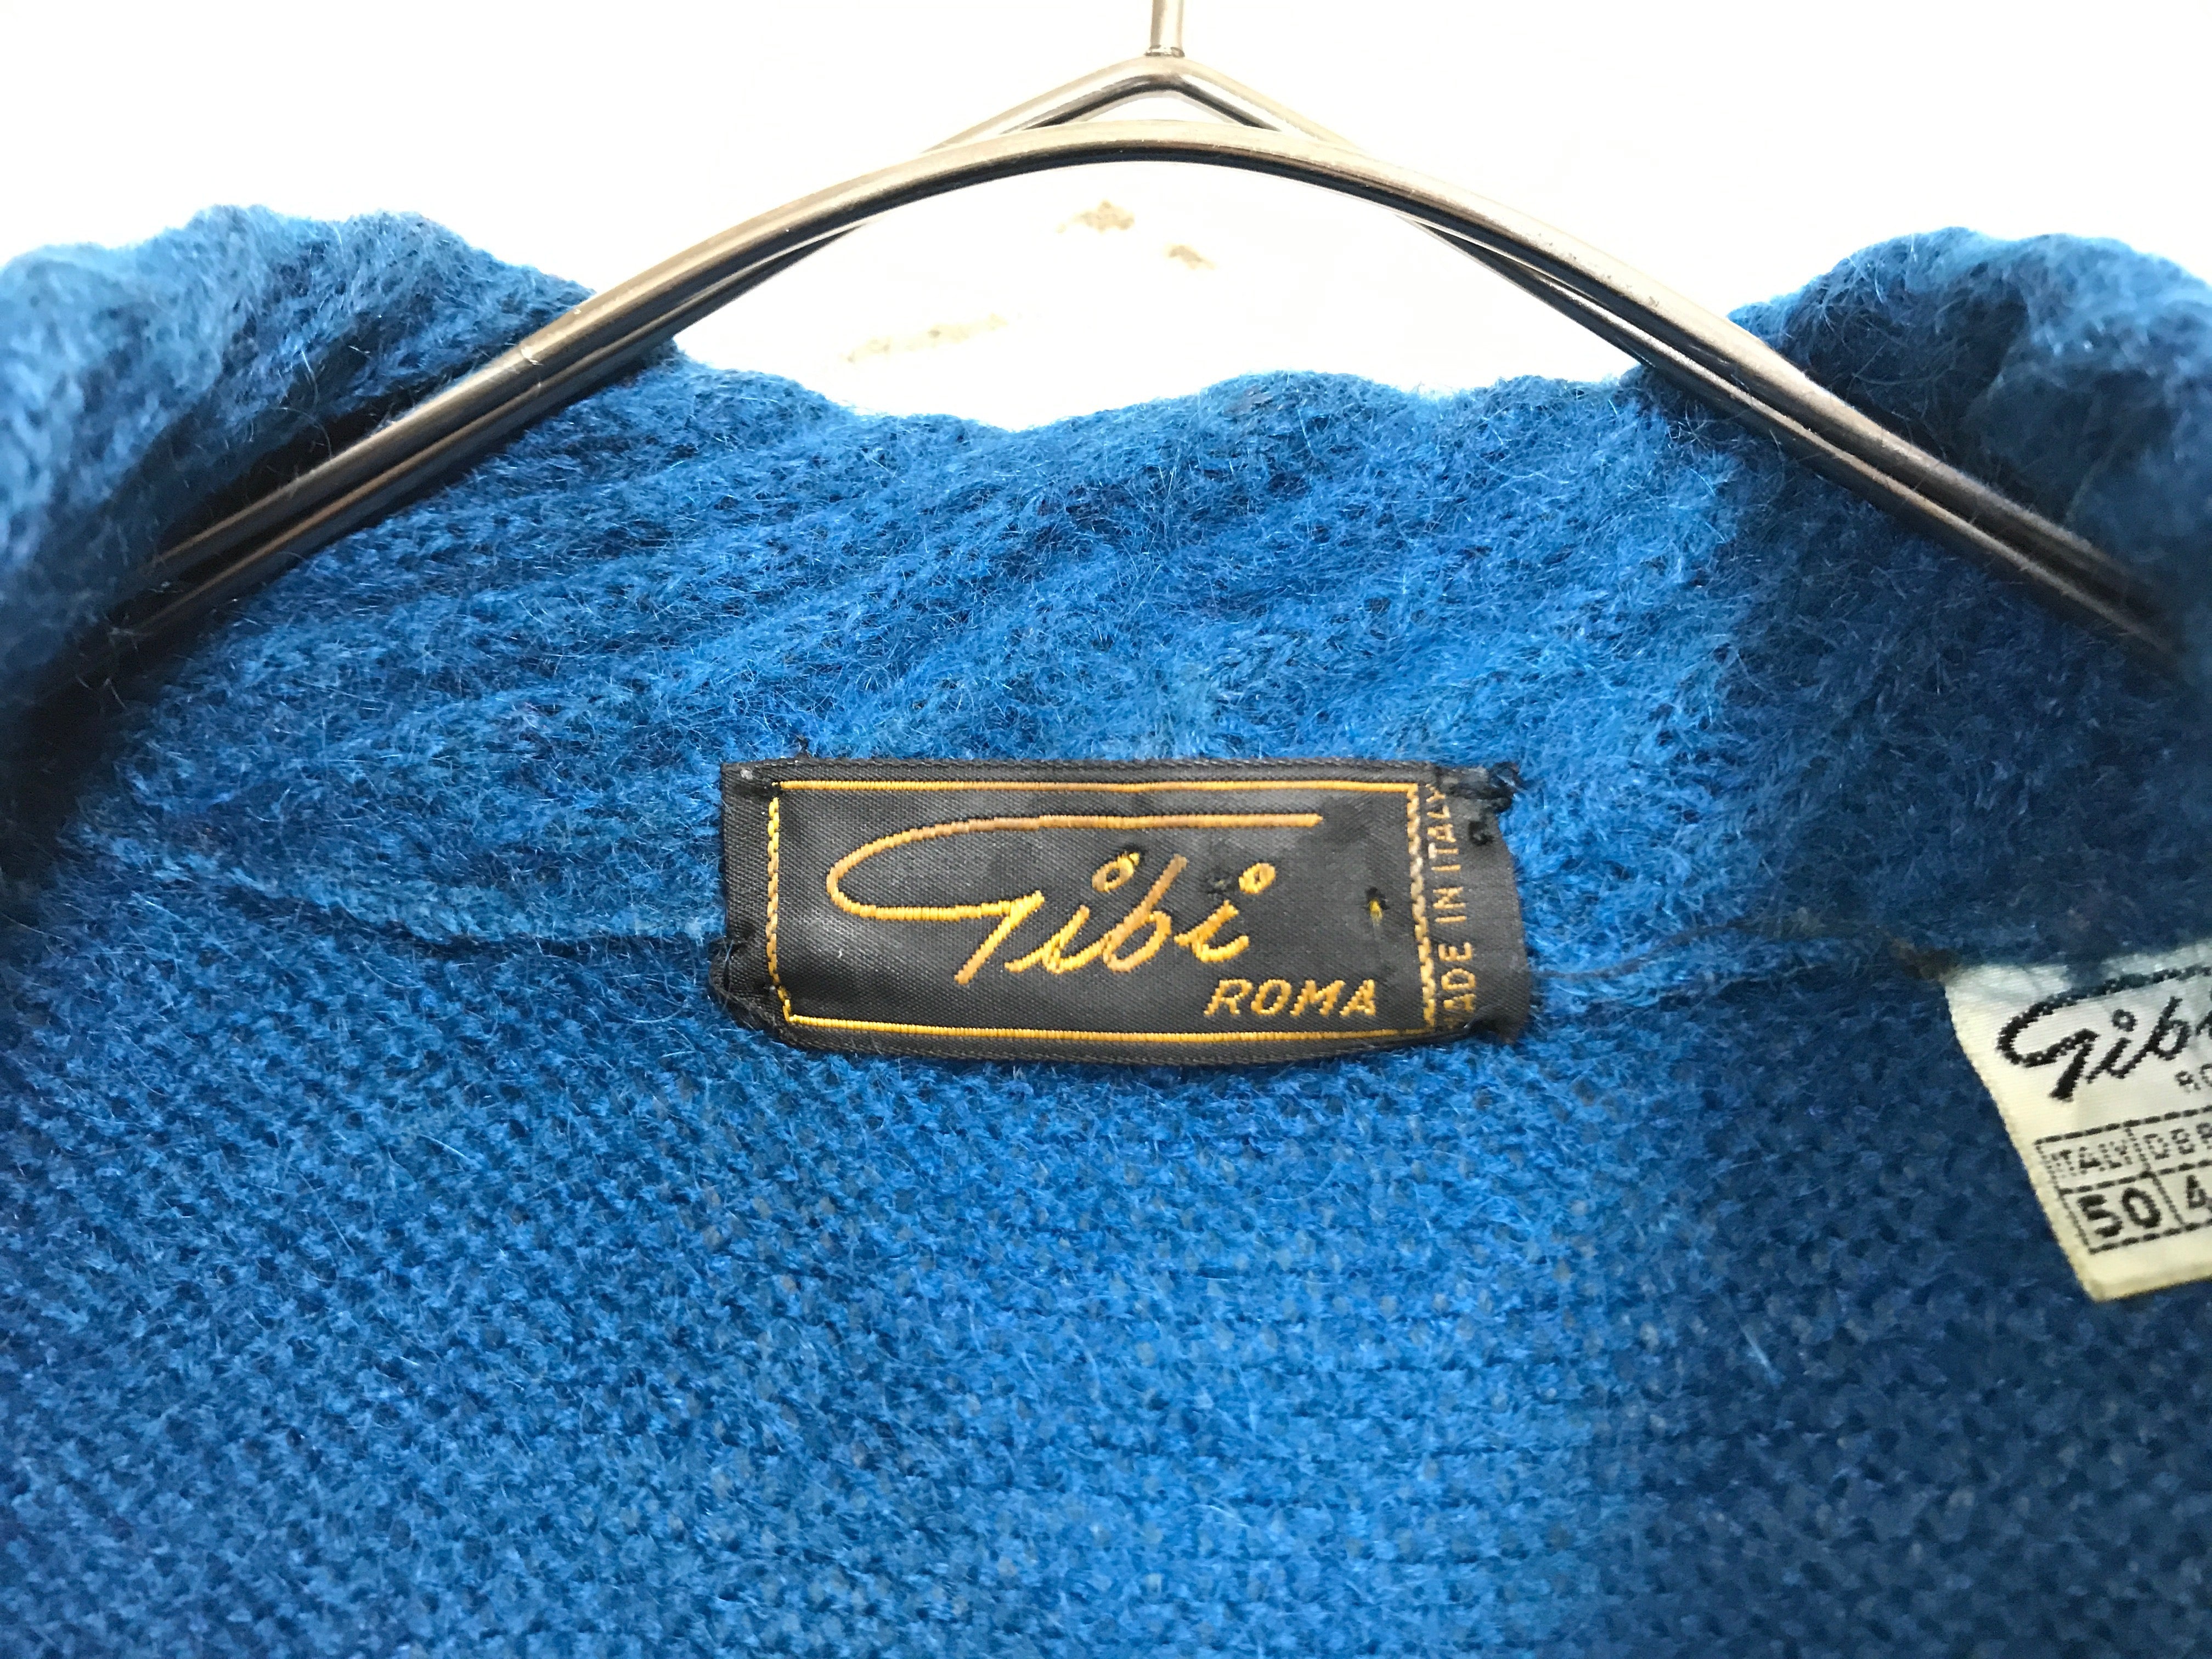 mohair/wool fake-layered knit sweater